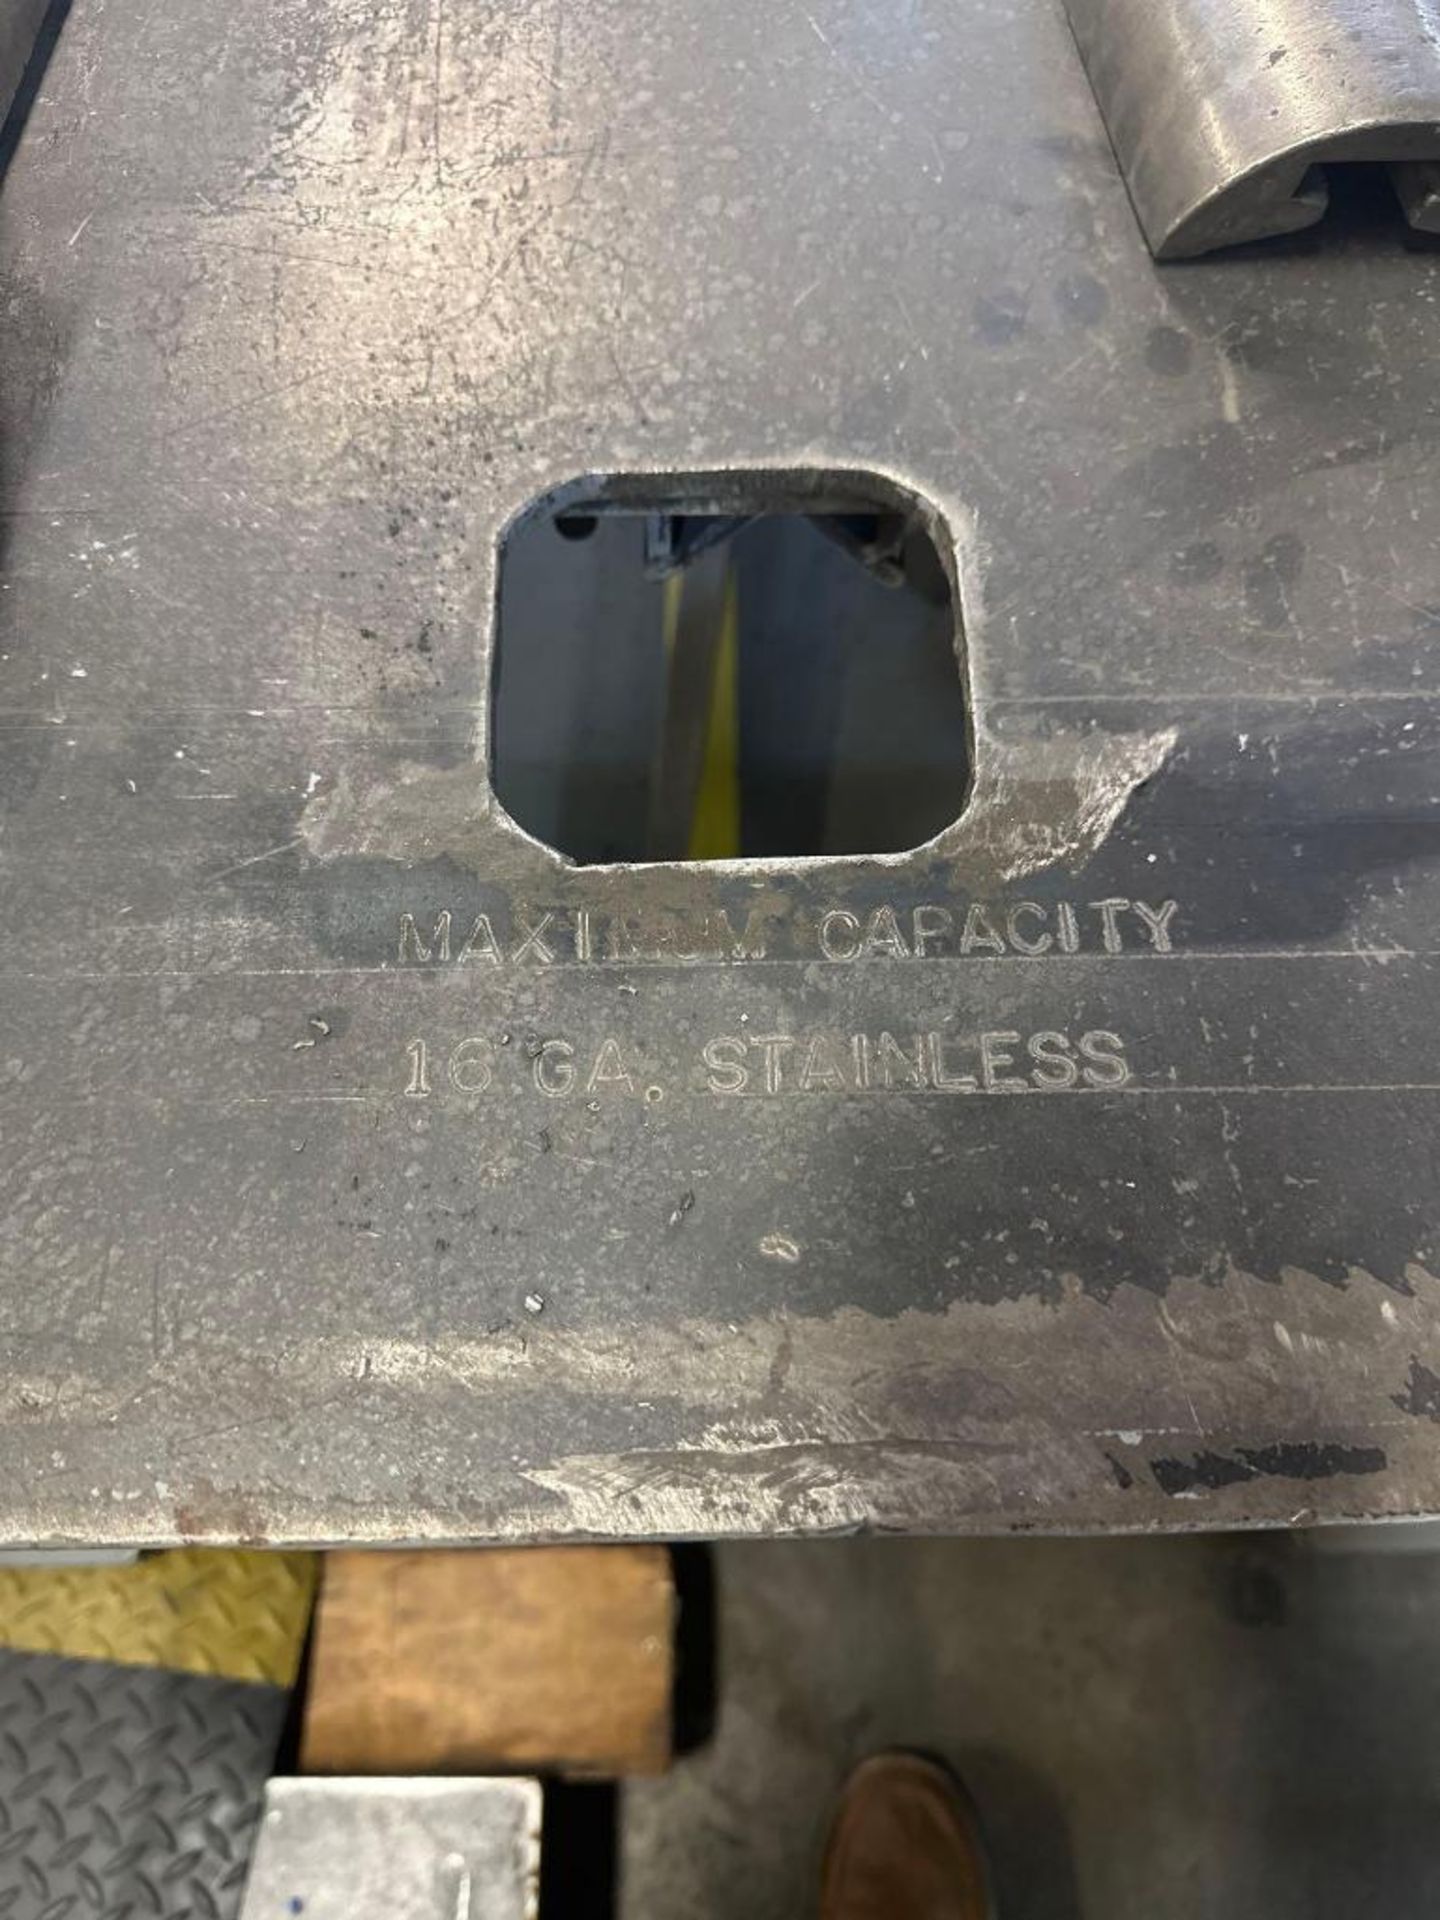 Niagara Heavy Duty Steel Bar Bender Table - Image 4 of 4